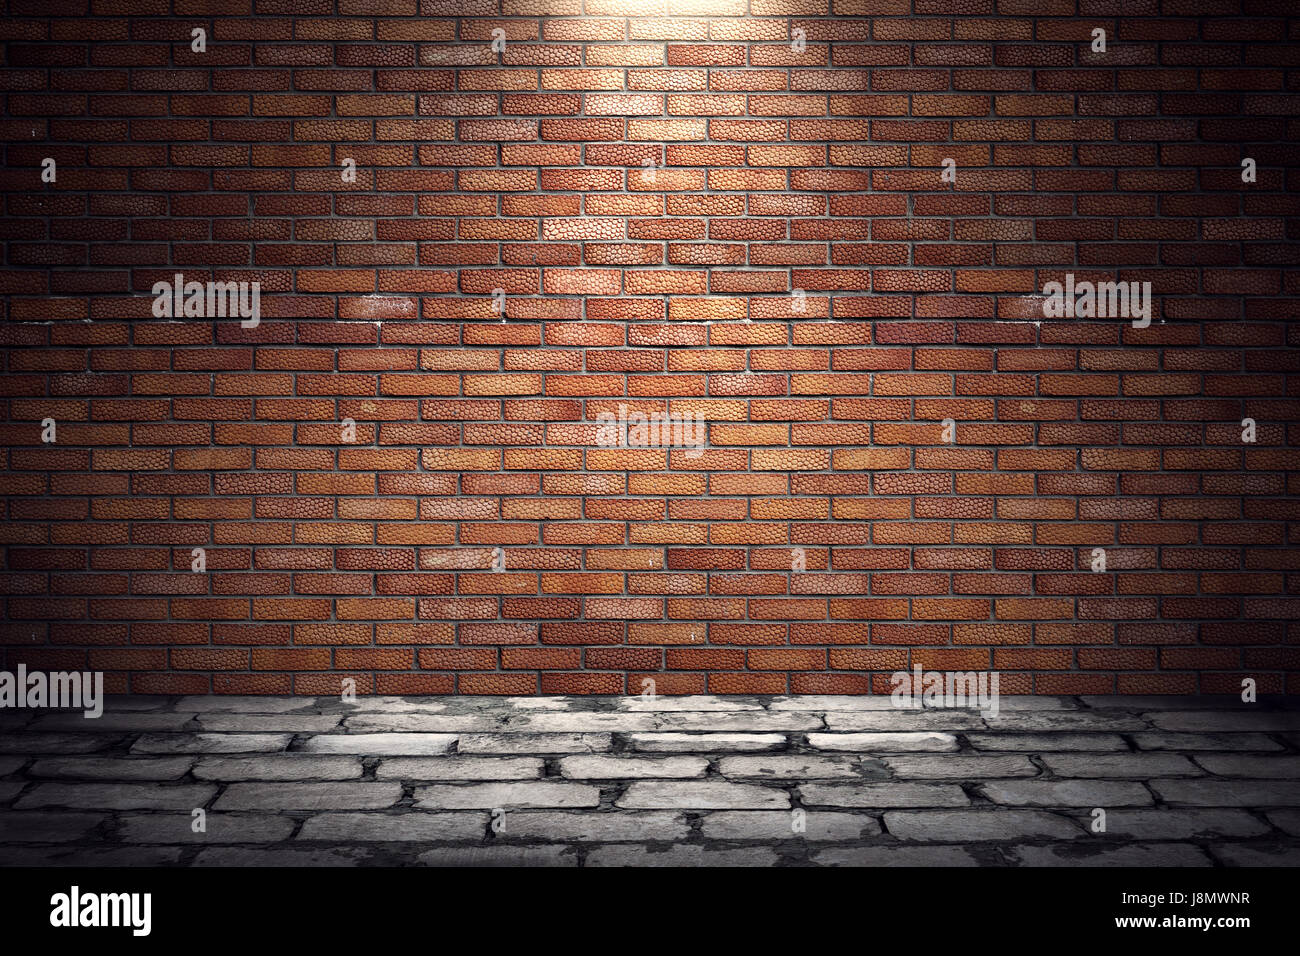 Brick Wall Background 6979986